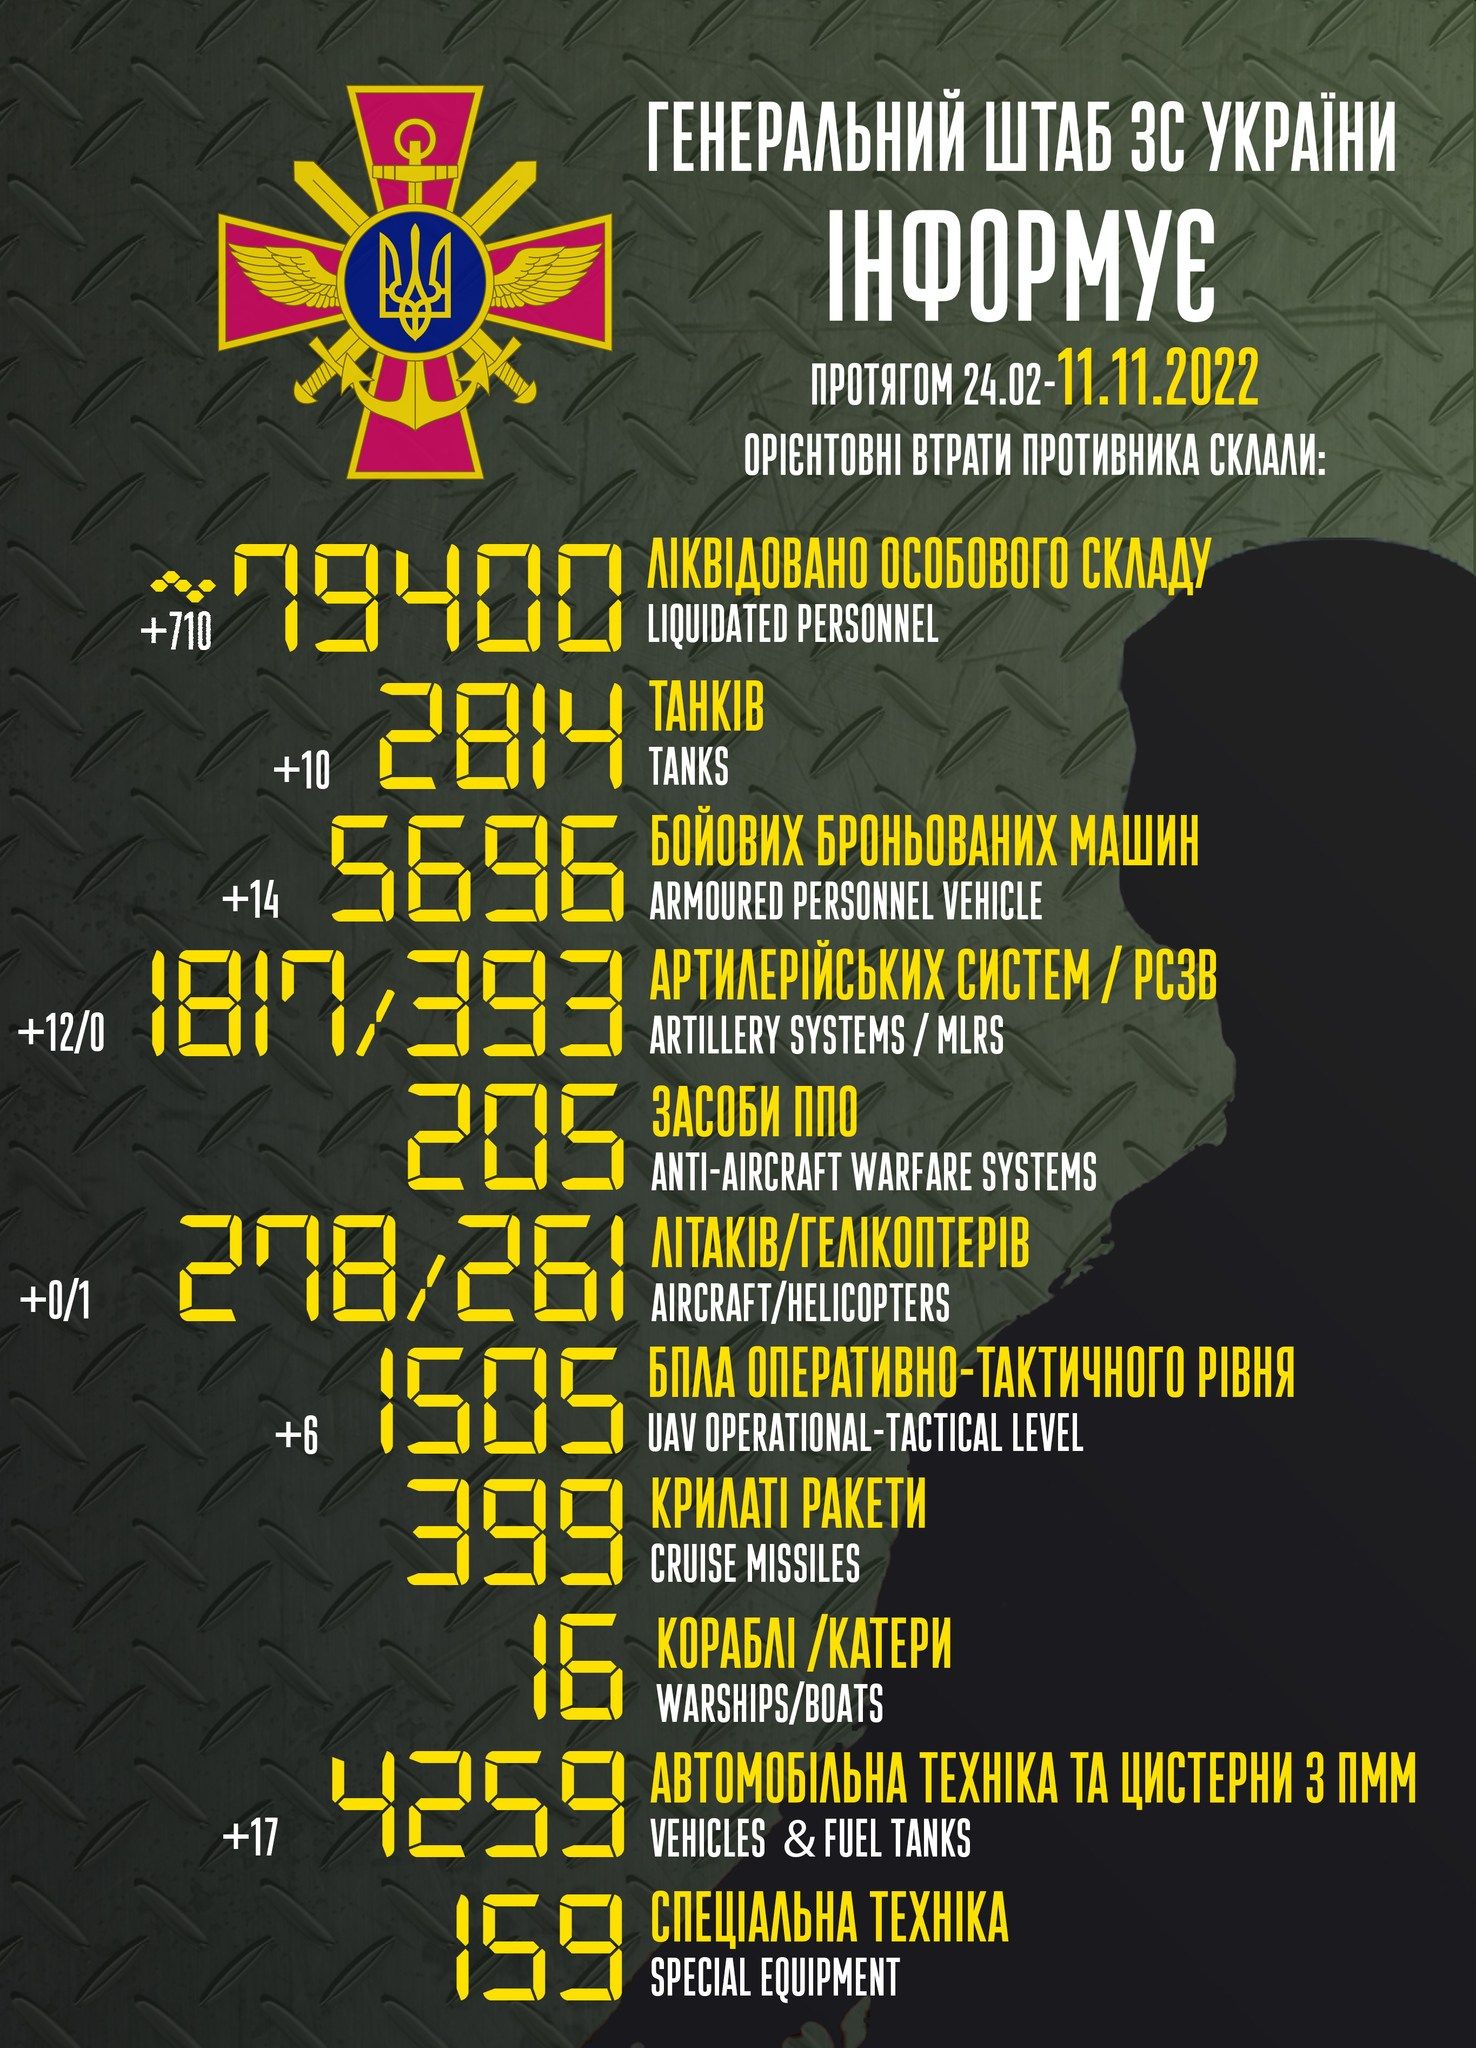 Russia's losses approaching 80,000 soldiers Ukrainska Pravda